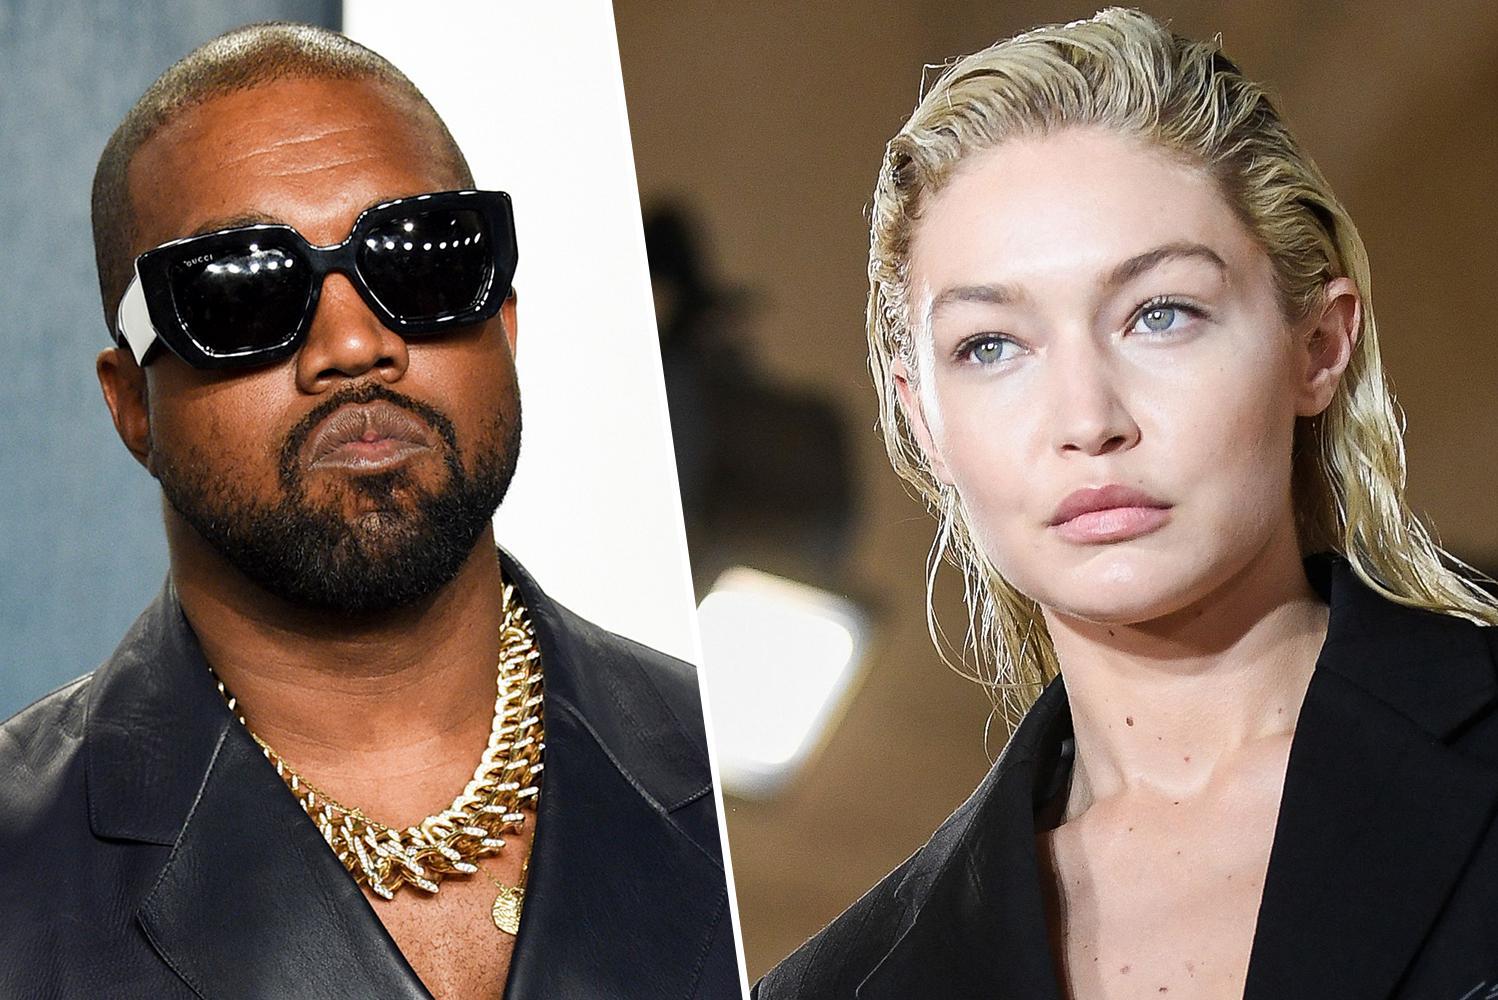 Gigi Hadid chiama Kanye West “prepotente” e “scherzo” dopo la sua felpa “White Lives Matter”